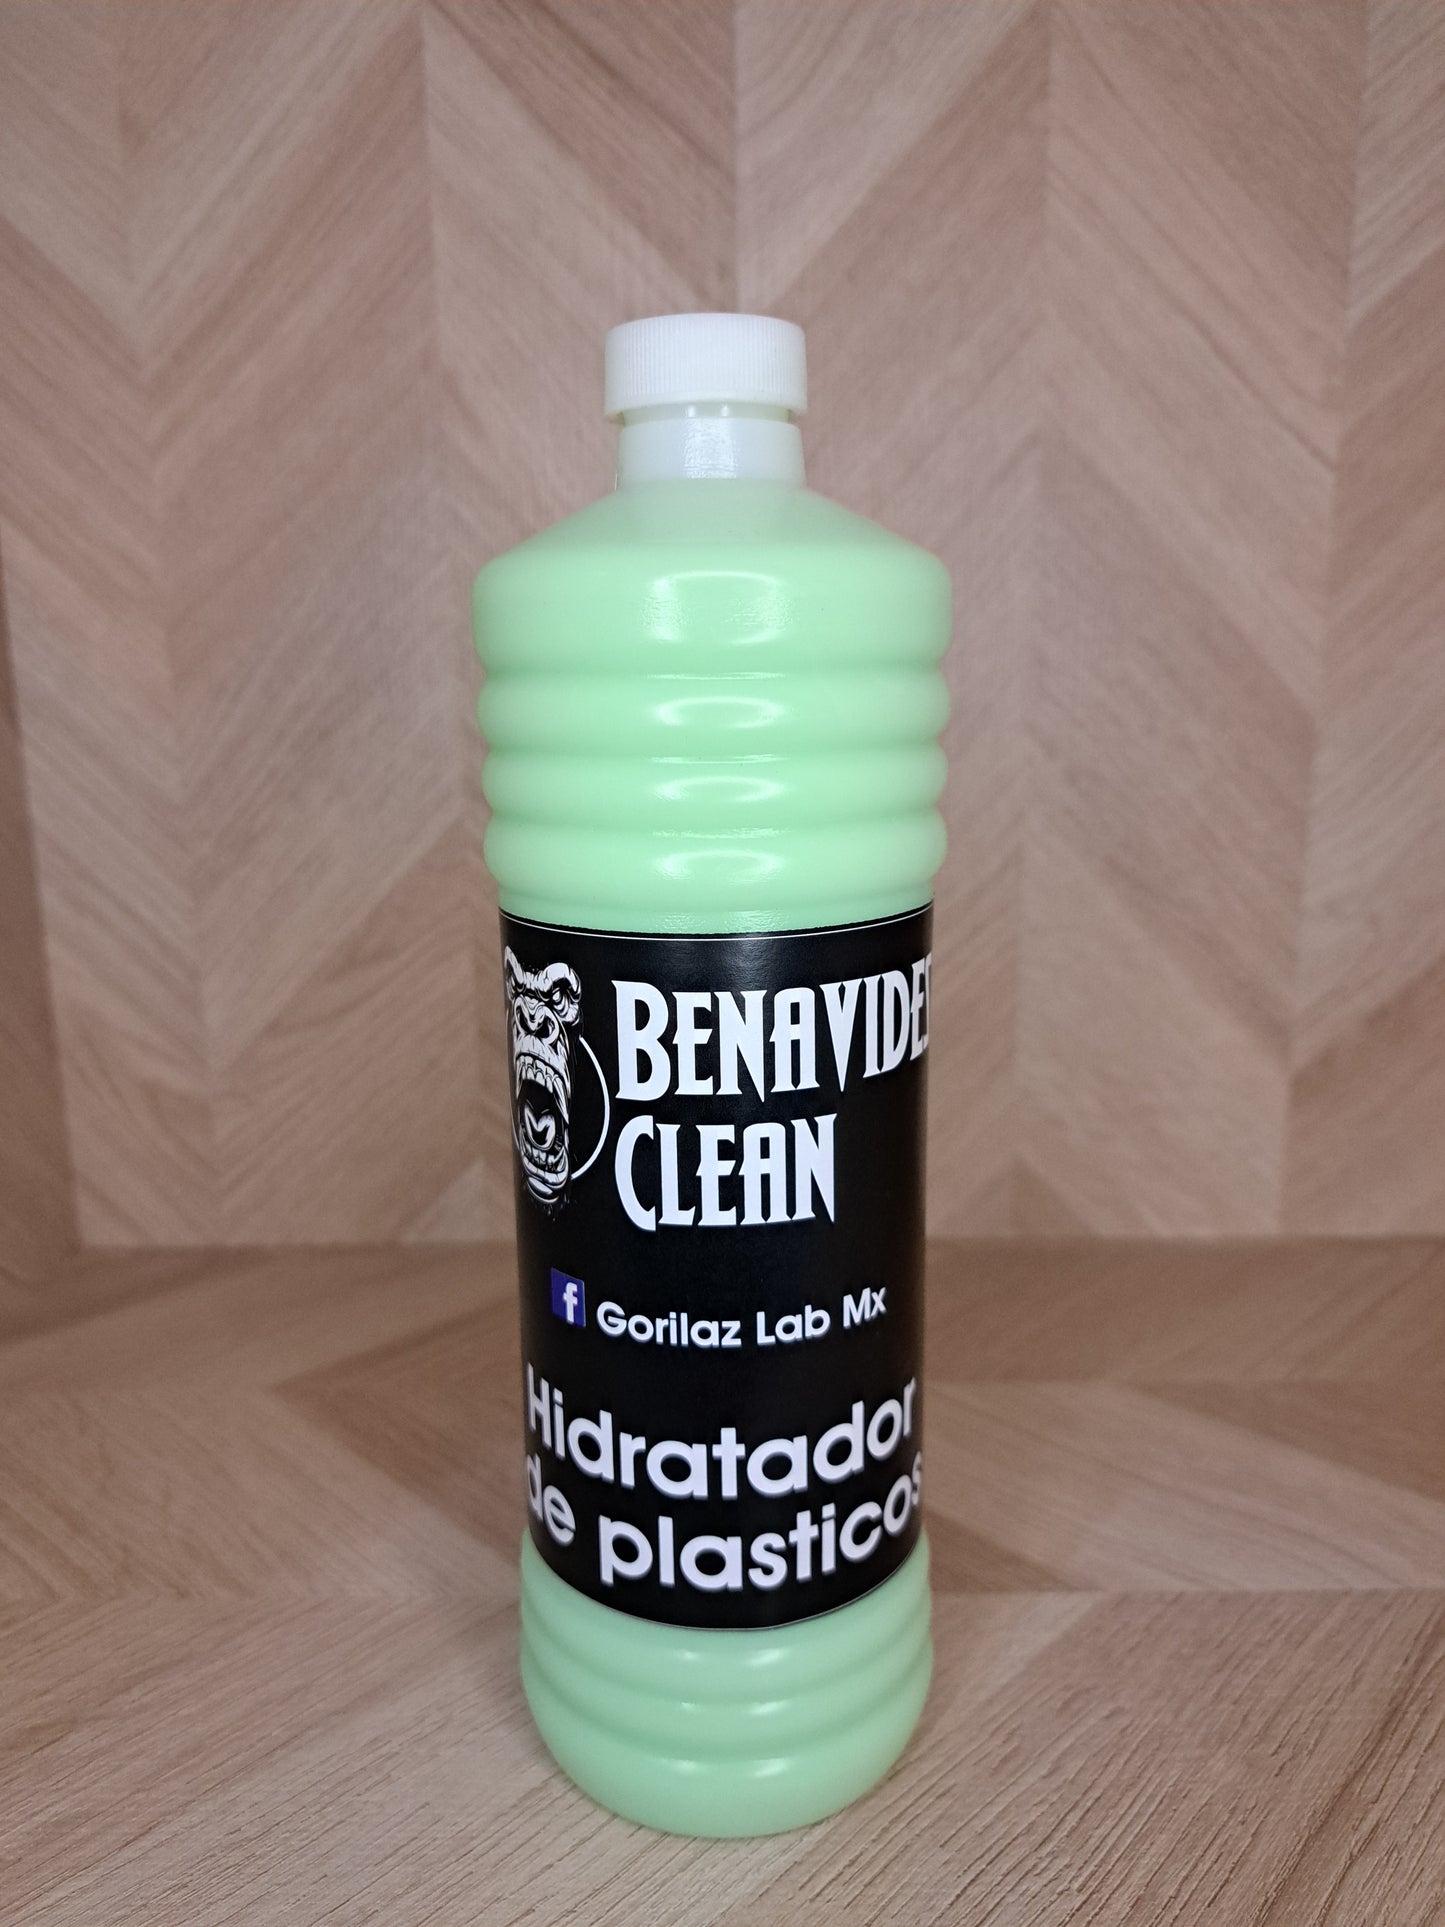 Benavides Clean